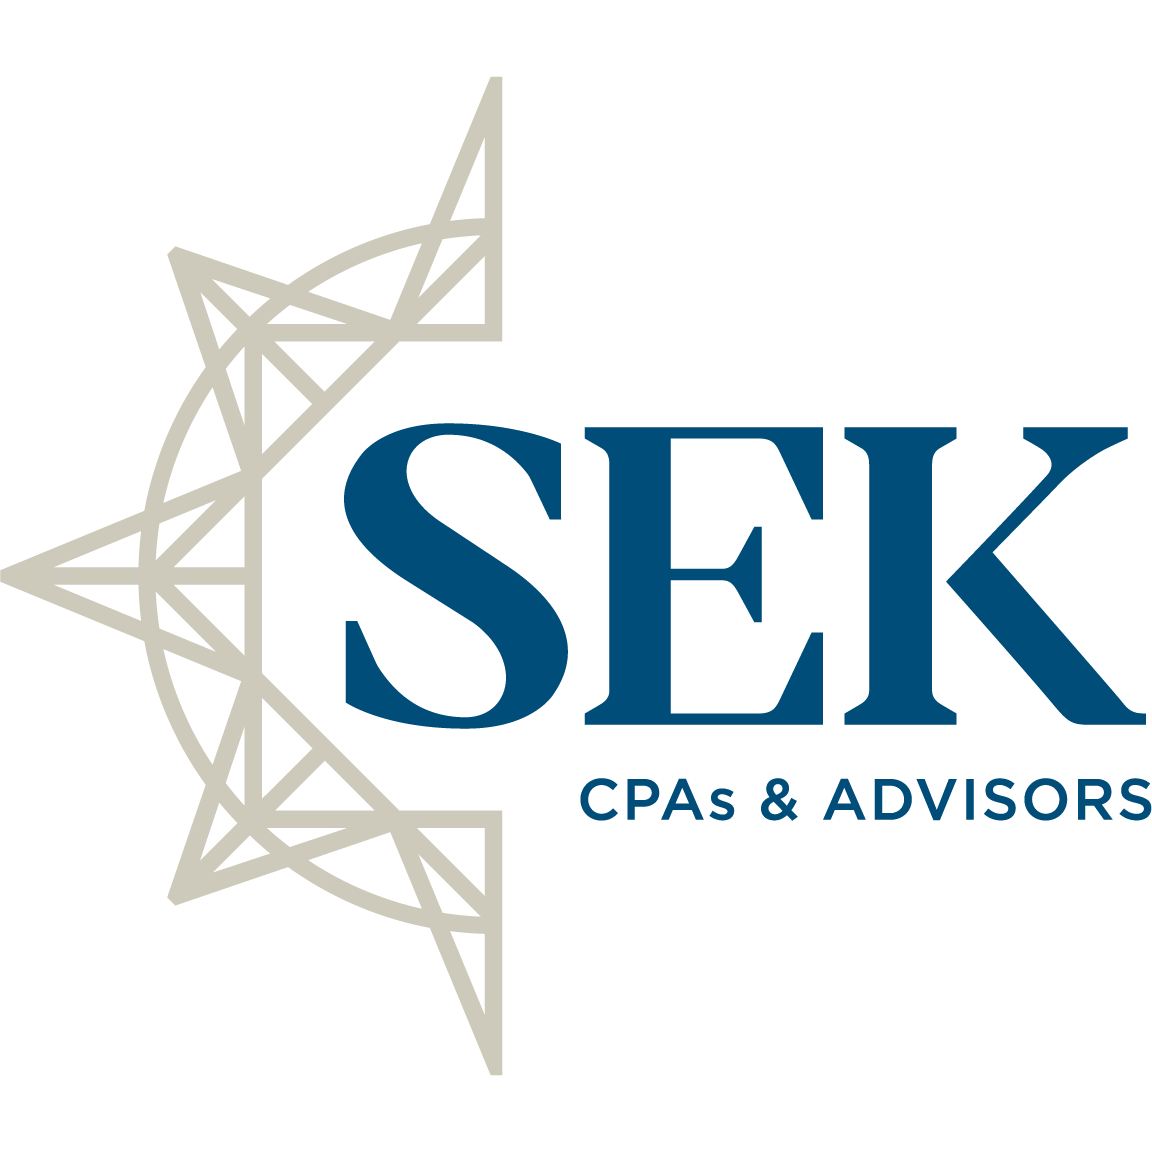 SEK, CPAs & Advisors Camp Hill (717)975-3436